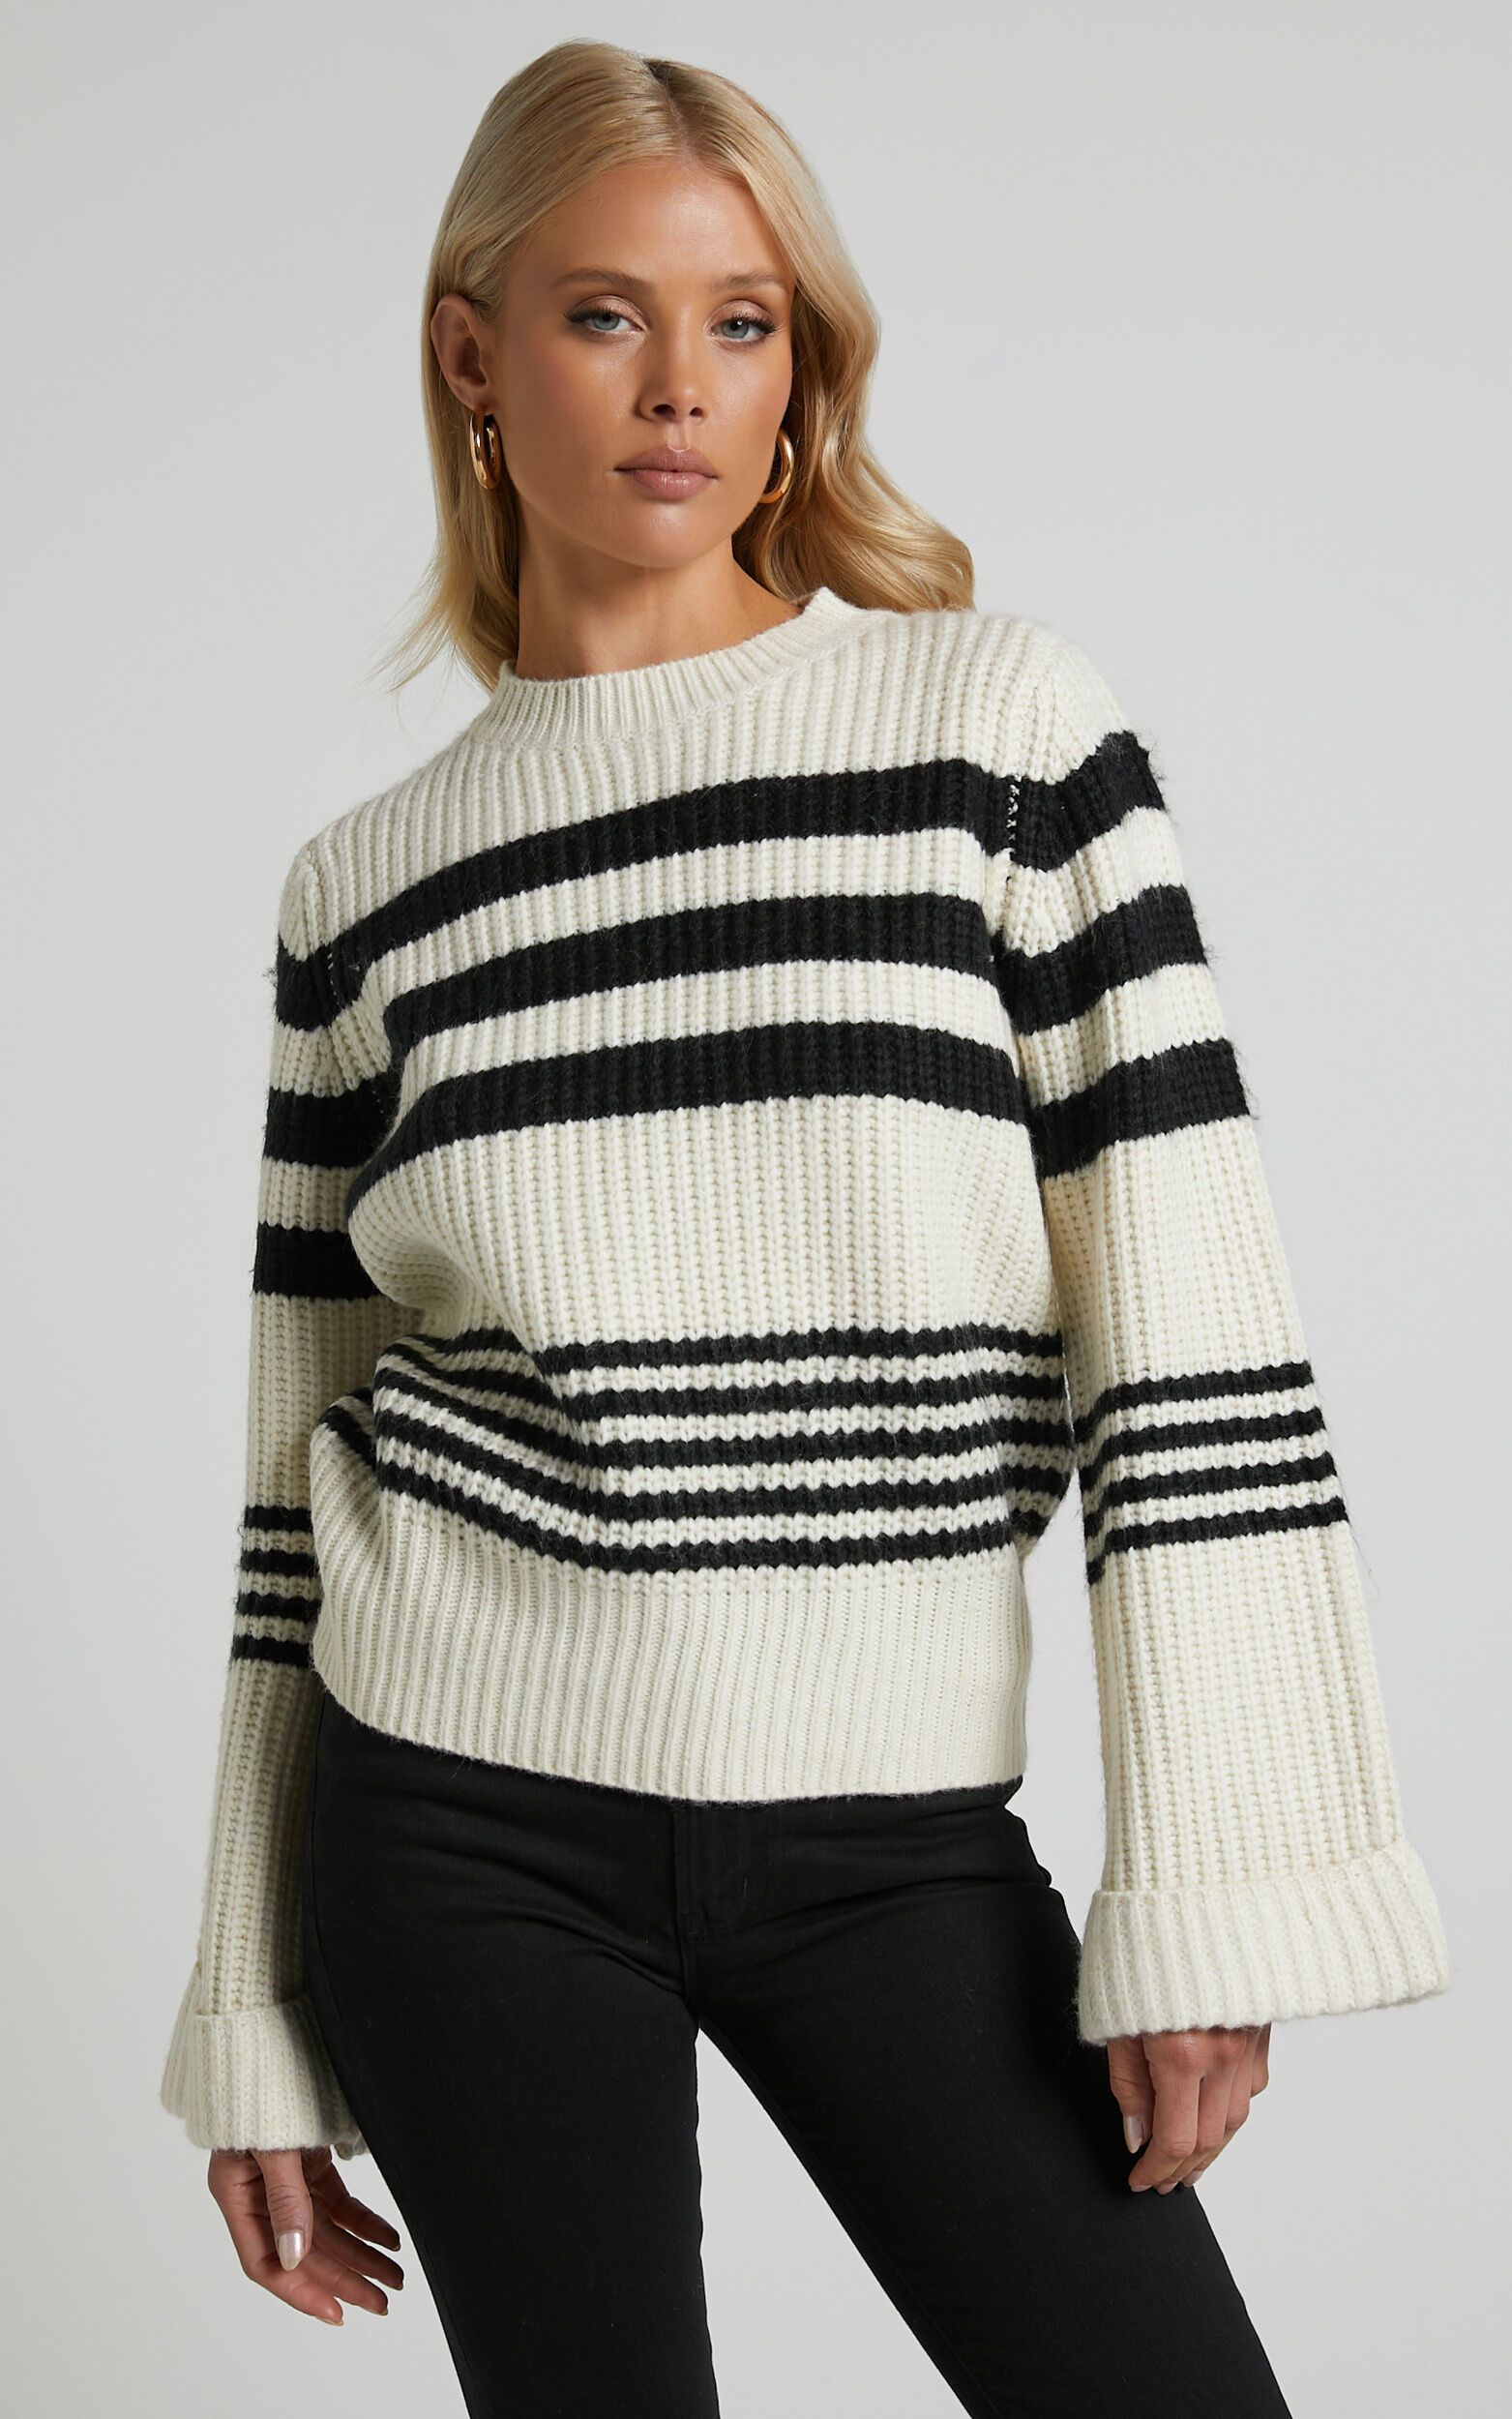 Pheney striped crew neck knit sweater in Cream and Black | Showpo (US, UK & Europe)